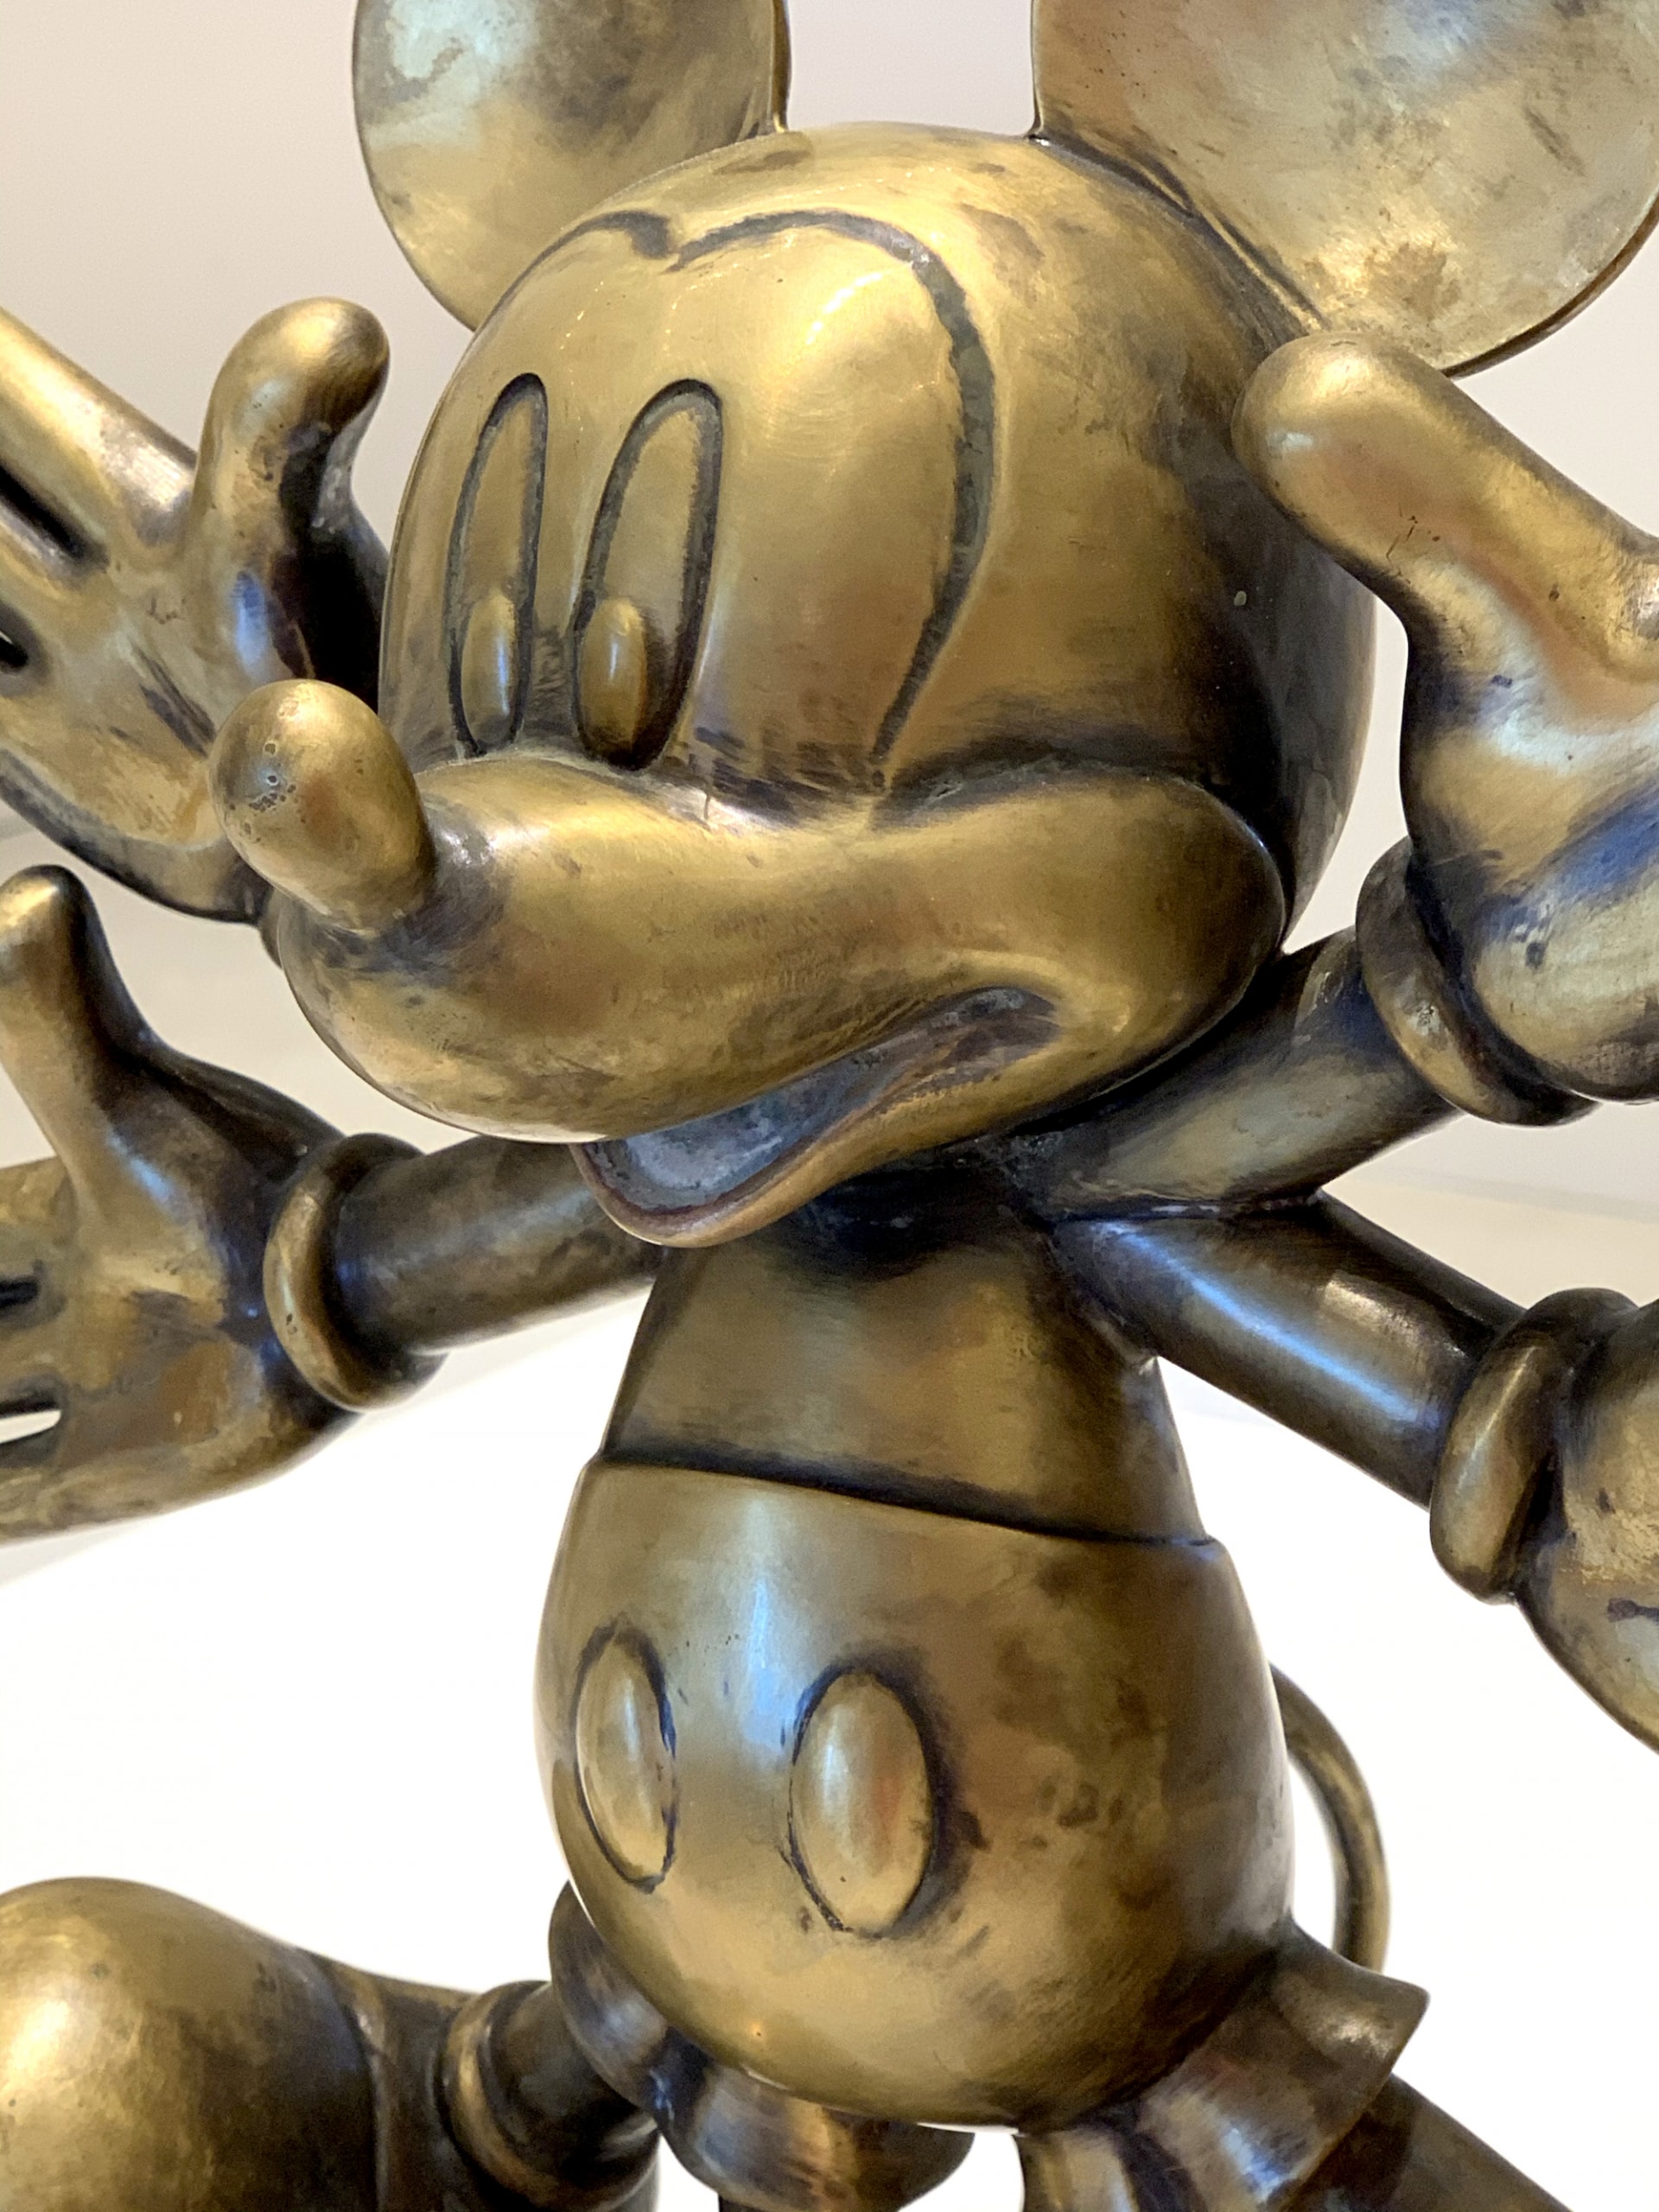 POP INFINITY Art Collectibles 联名「Snow Angel Mickey」系列即将登场